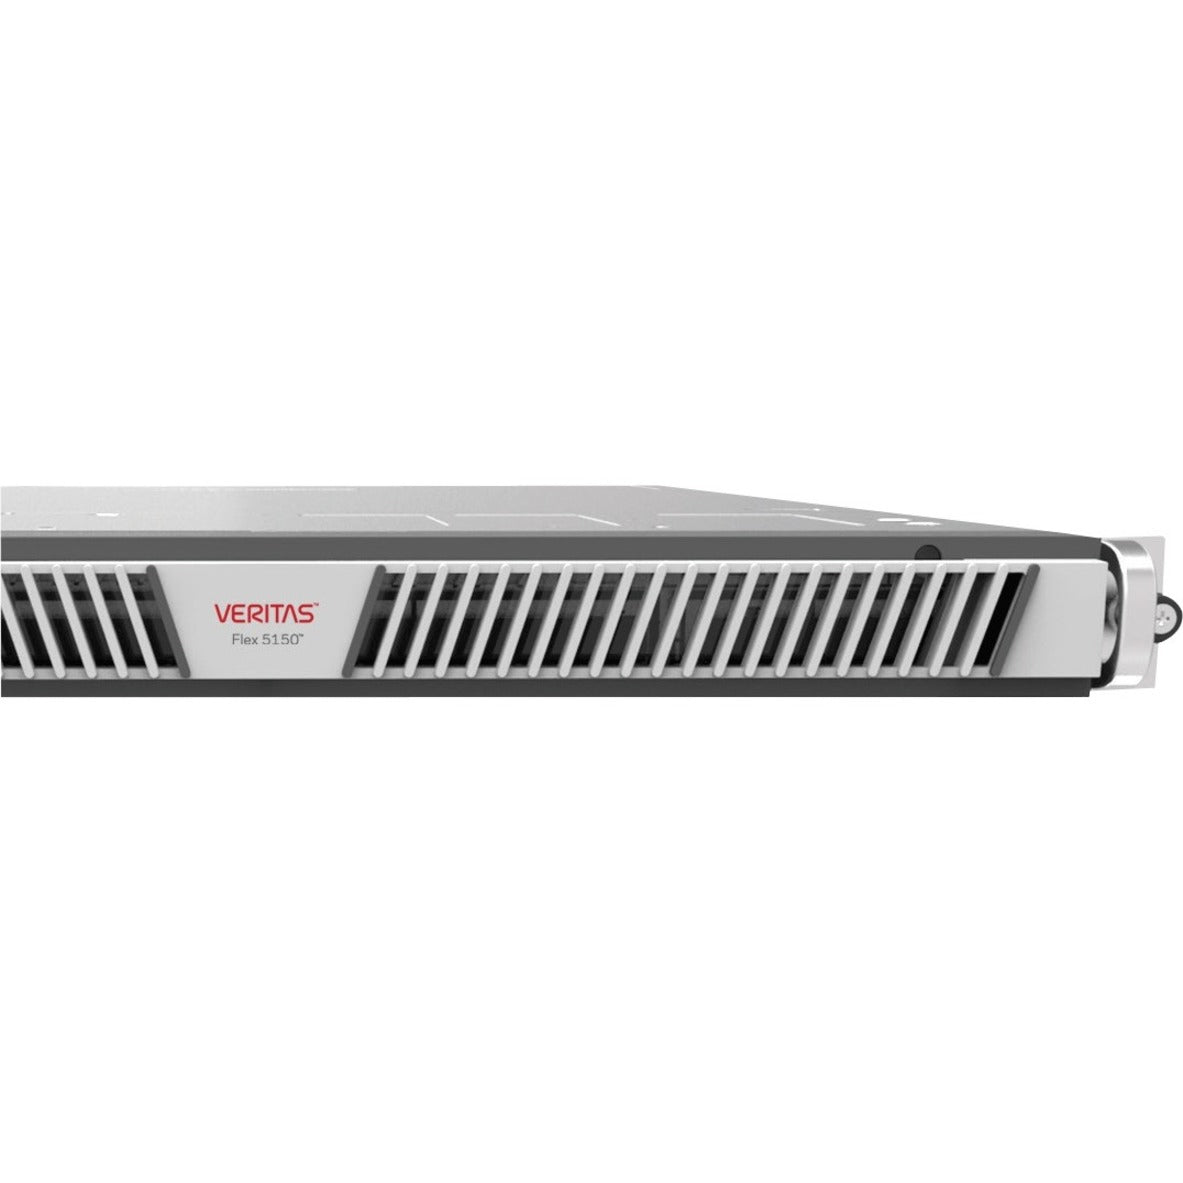 Veritas 26118-M4217 Flex System 5150 NAS Storage System, 15TB Total Hard Drive Capacity Installed, 12Gb/s SAS Controller, 8 Network (RJ-45) Ports, Rack-mountable